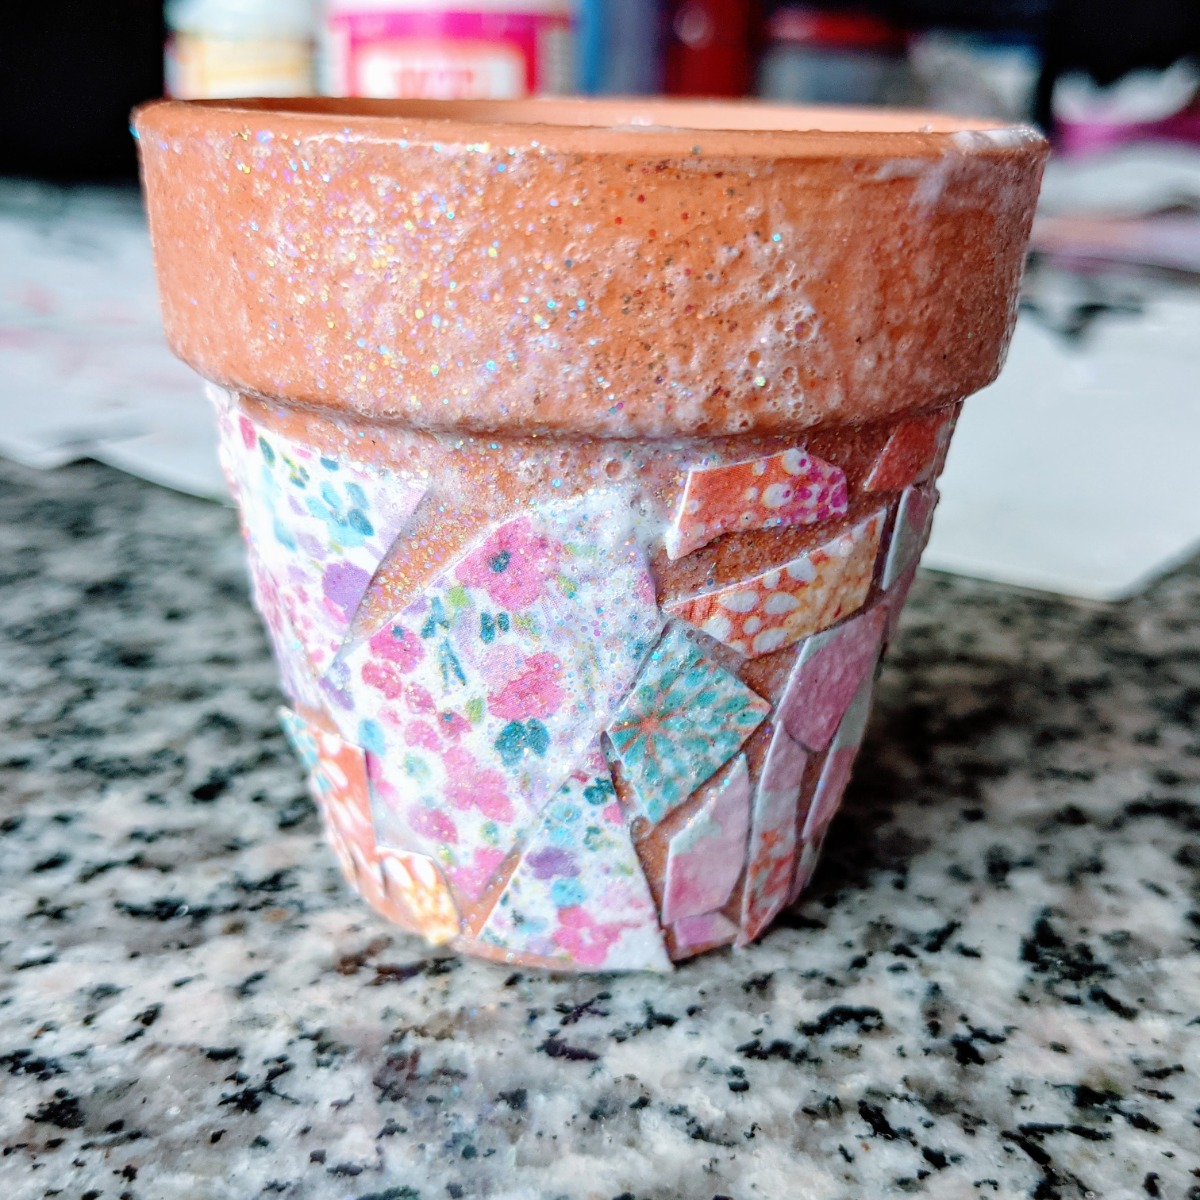 Pretty Mod Podge Use - Decoupage Mosaic Flower Pot